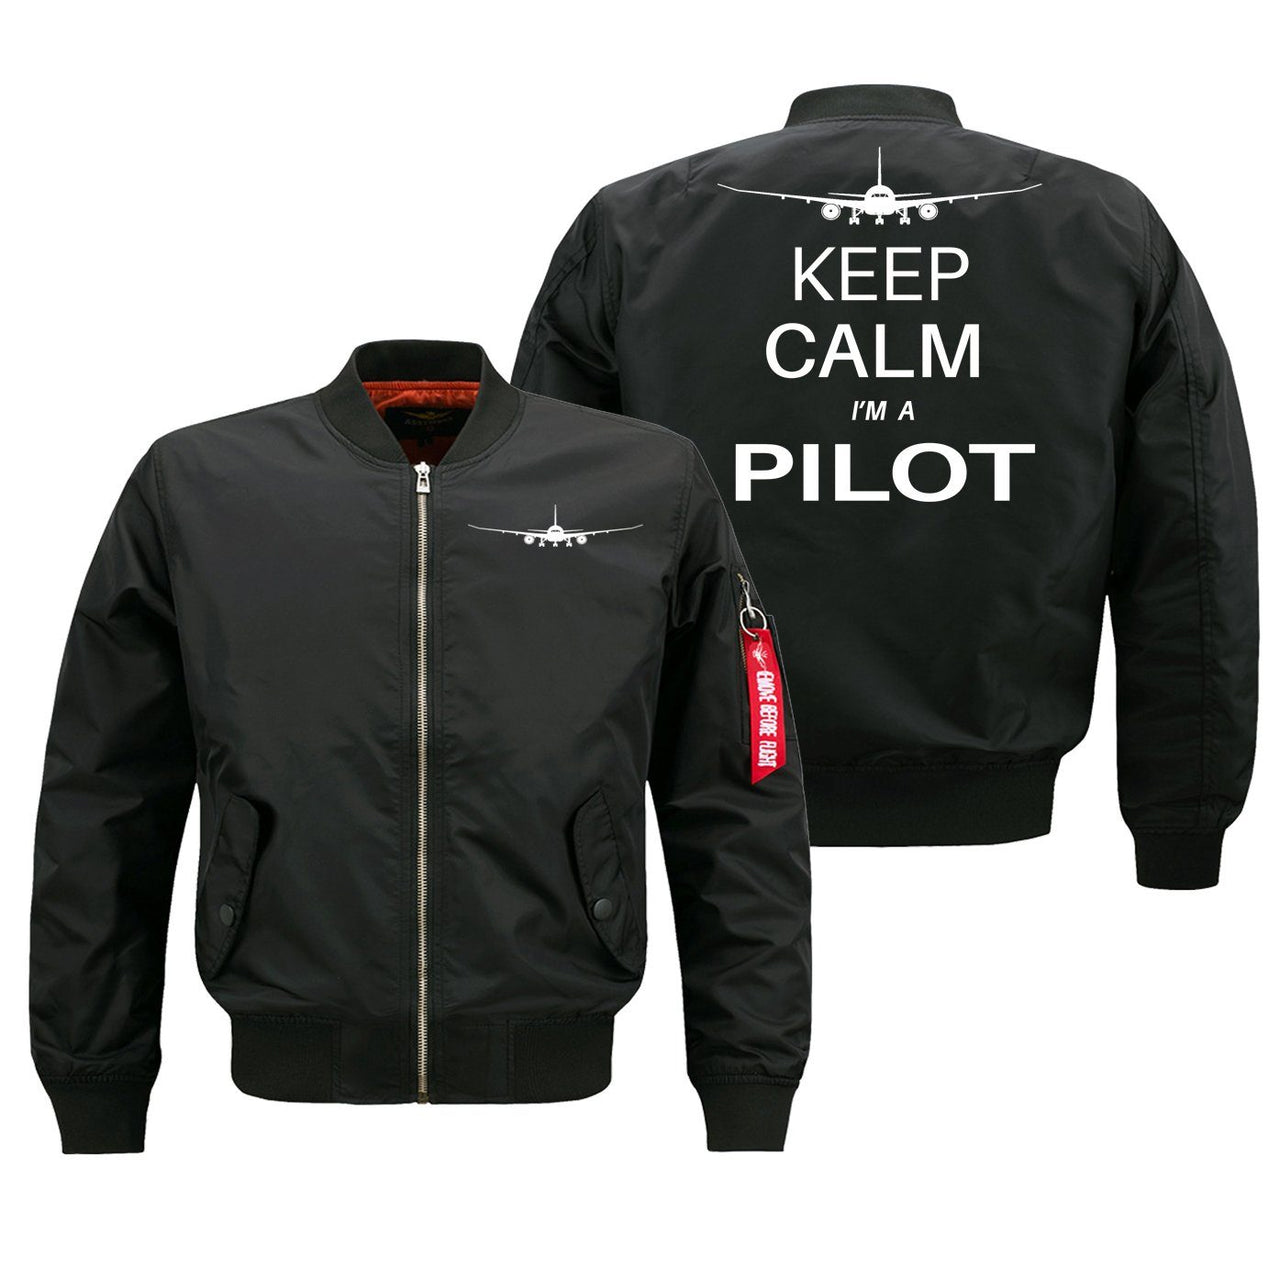 Keep Calm I'm a Pilot Designed Pilot Jackets (Customizable) Pilot Eyes Store Black (Thin) M (US XS) 